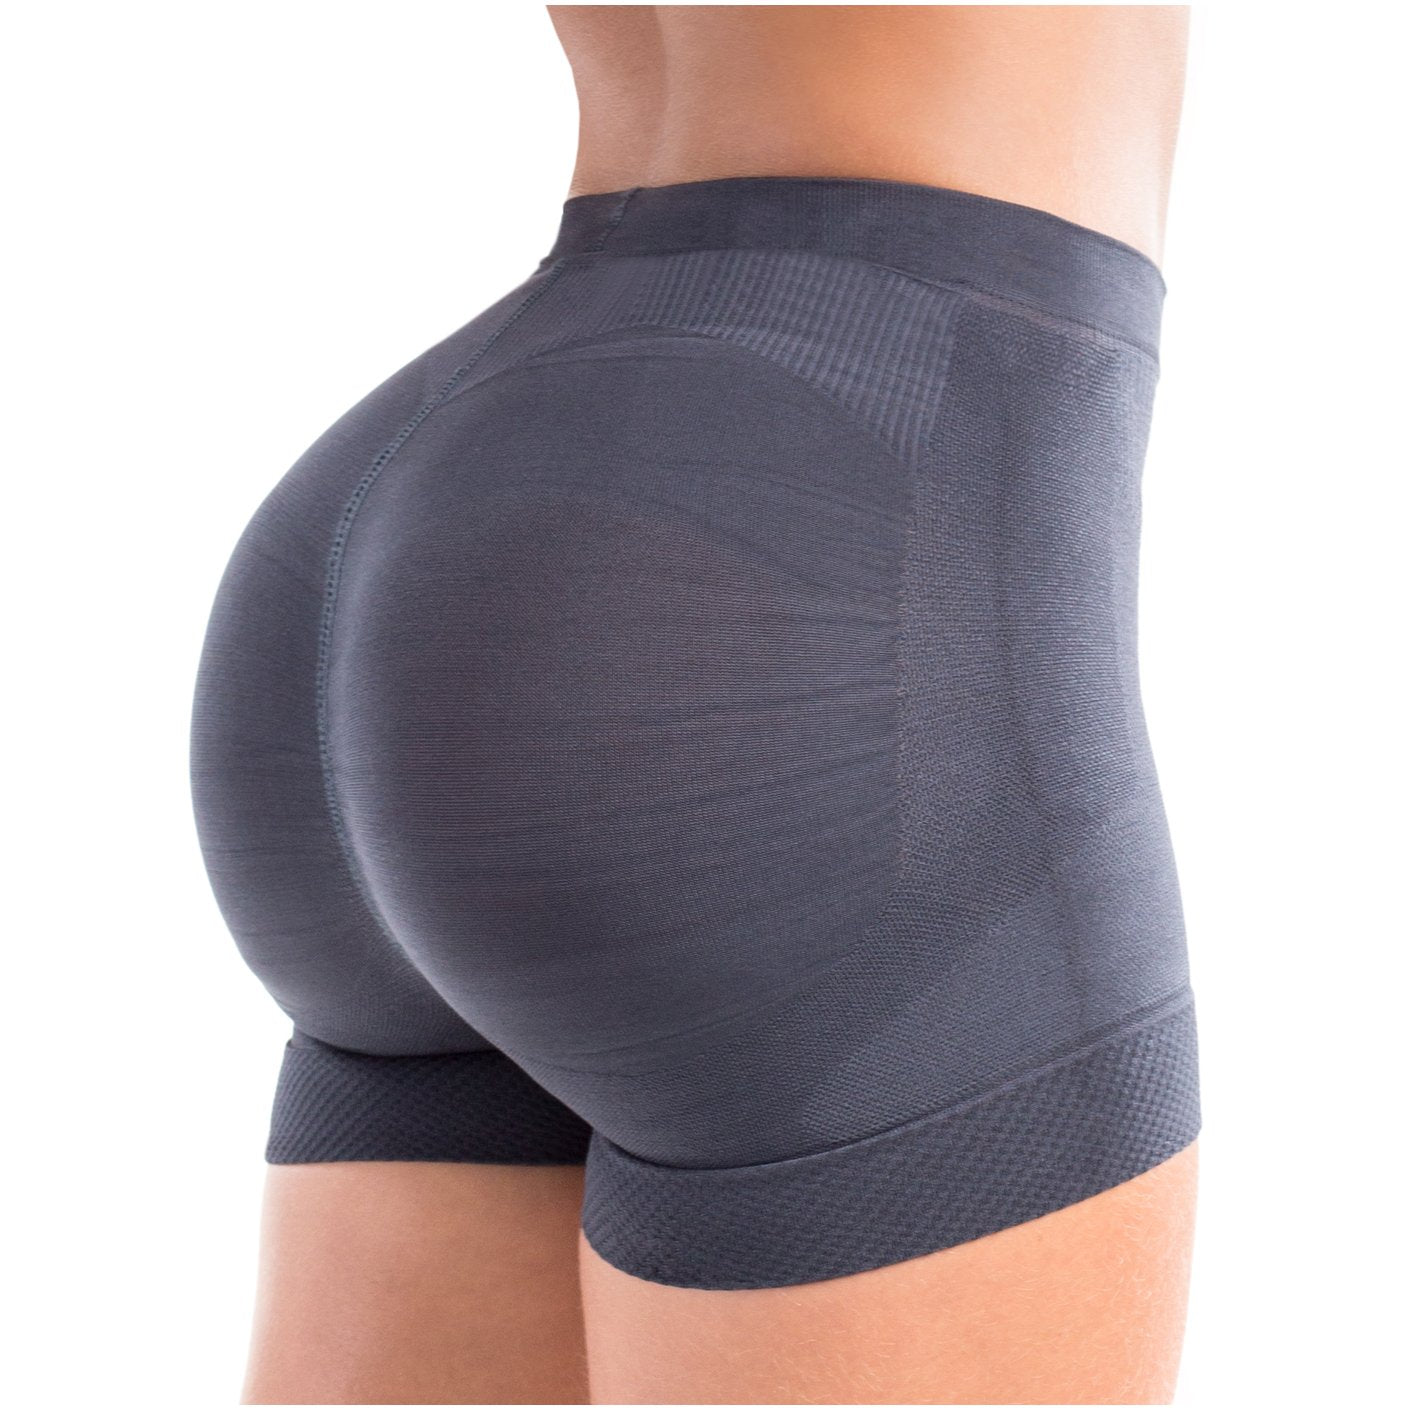 LT.Rose 21996 -  Womens High Waist Butt Lifting Shaping Shorts Mid Thigh Shapewar Fupa Control